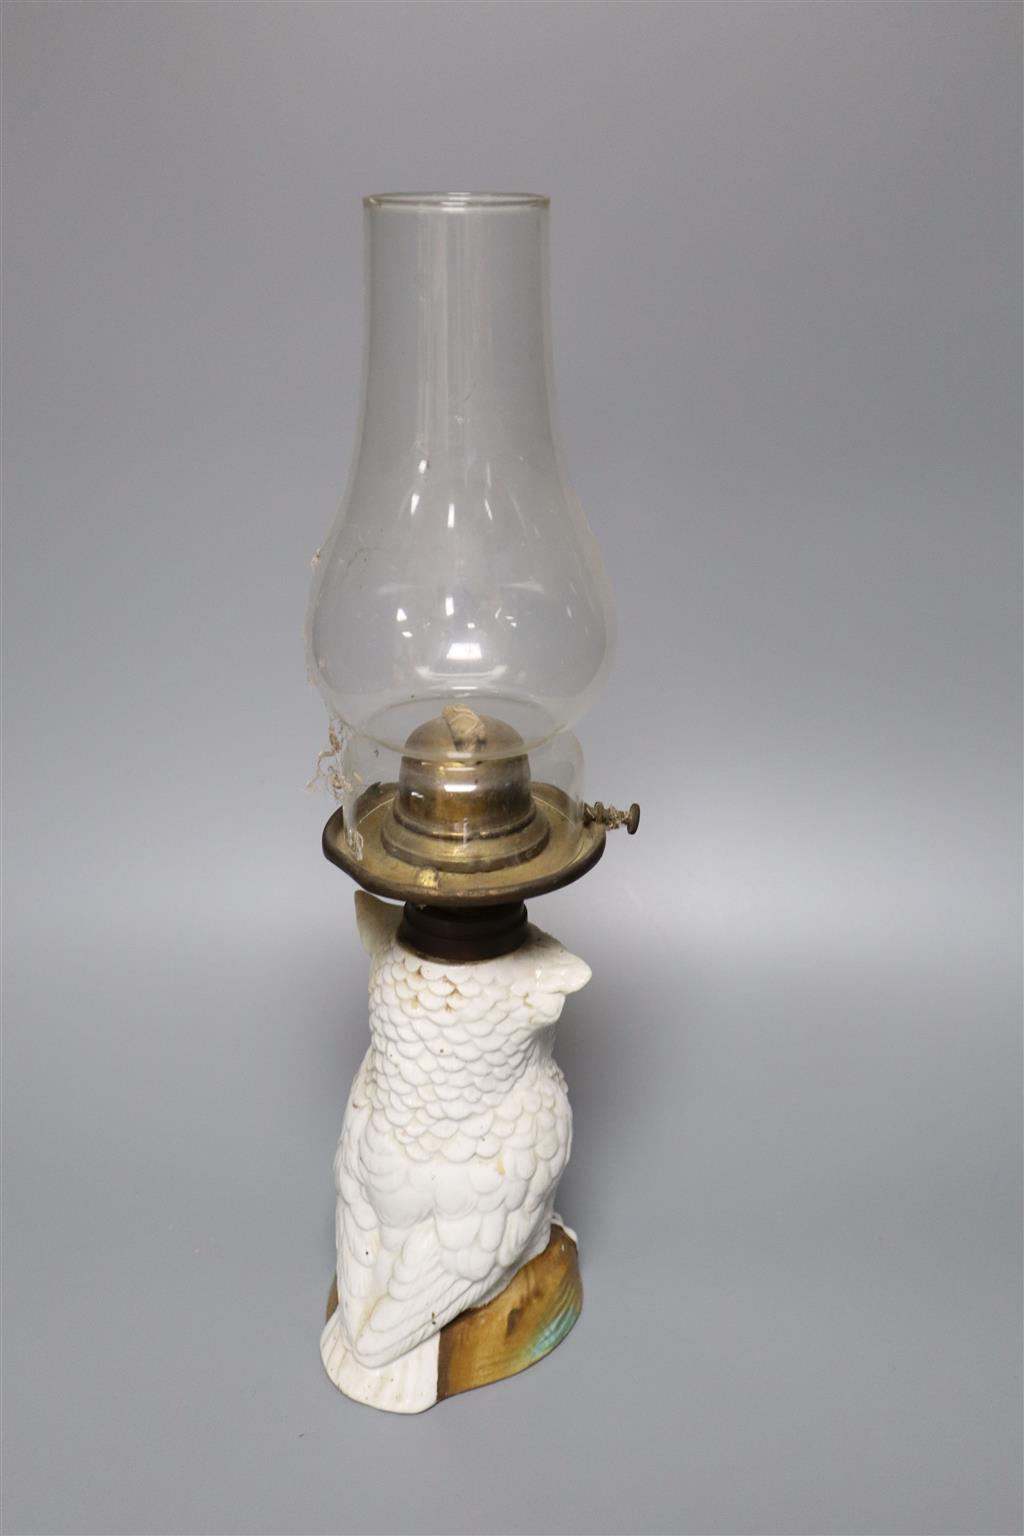 A Possneck porcelain owl novelty oil lamp, total height including chimney 37.5cm